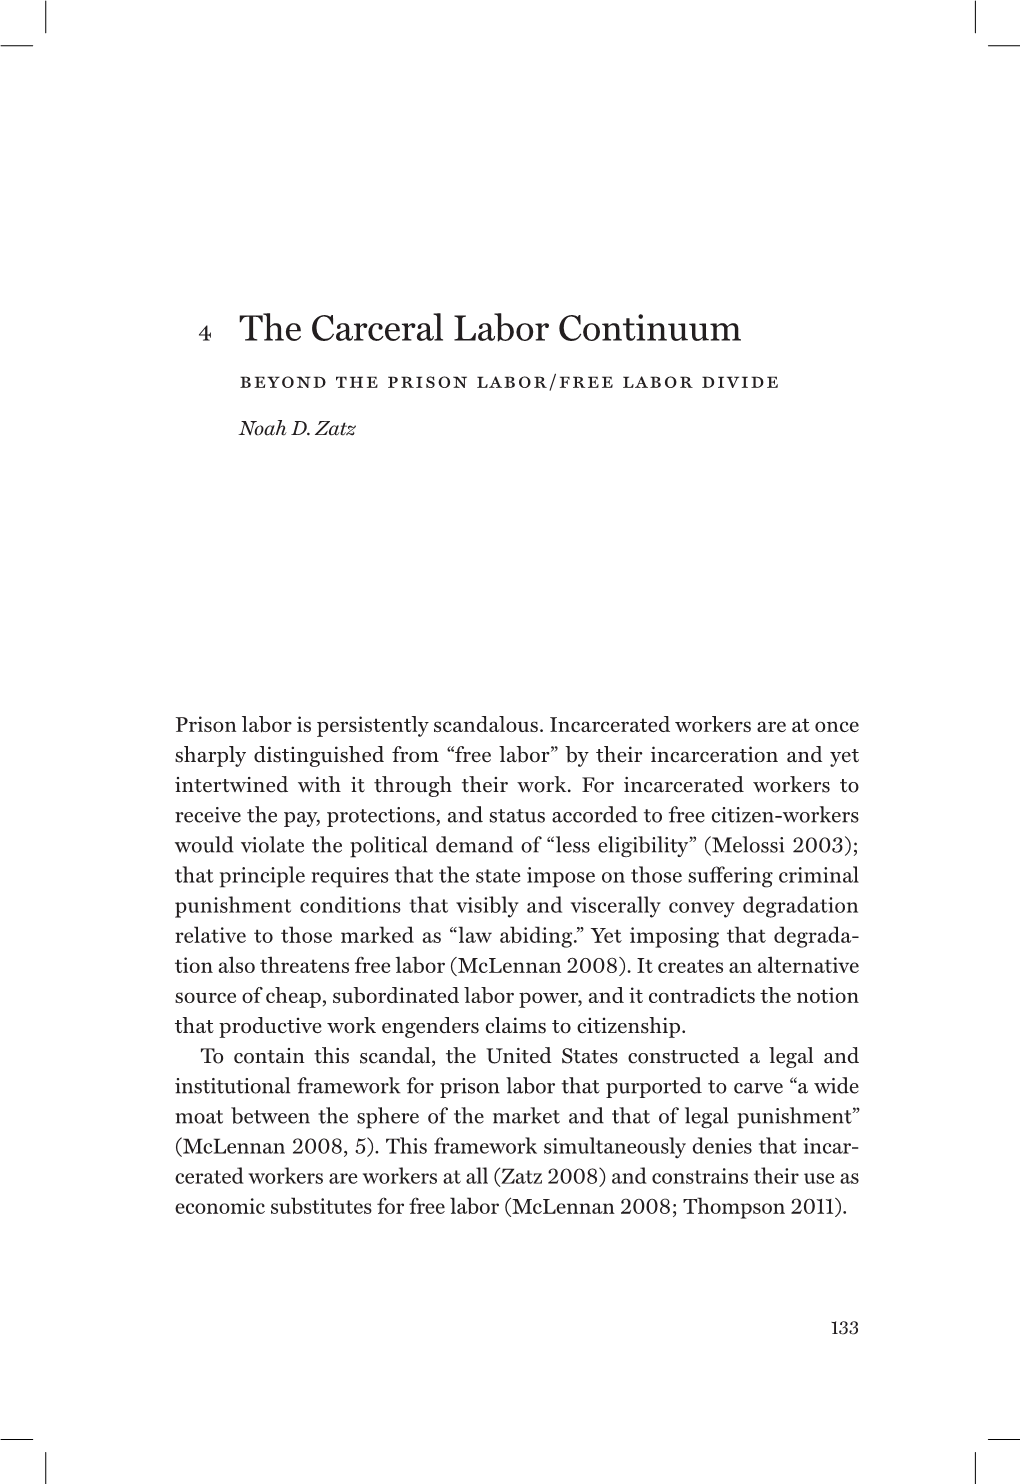 4 the Carceral Labor Continuum Beyond the Prison Labor/Free Labor Divide